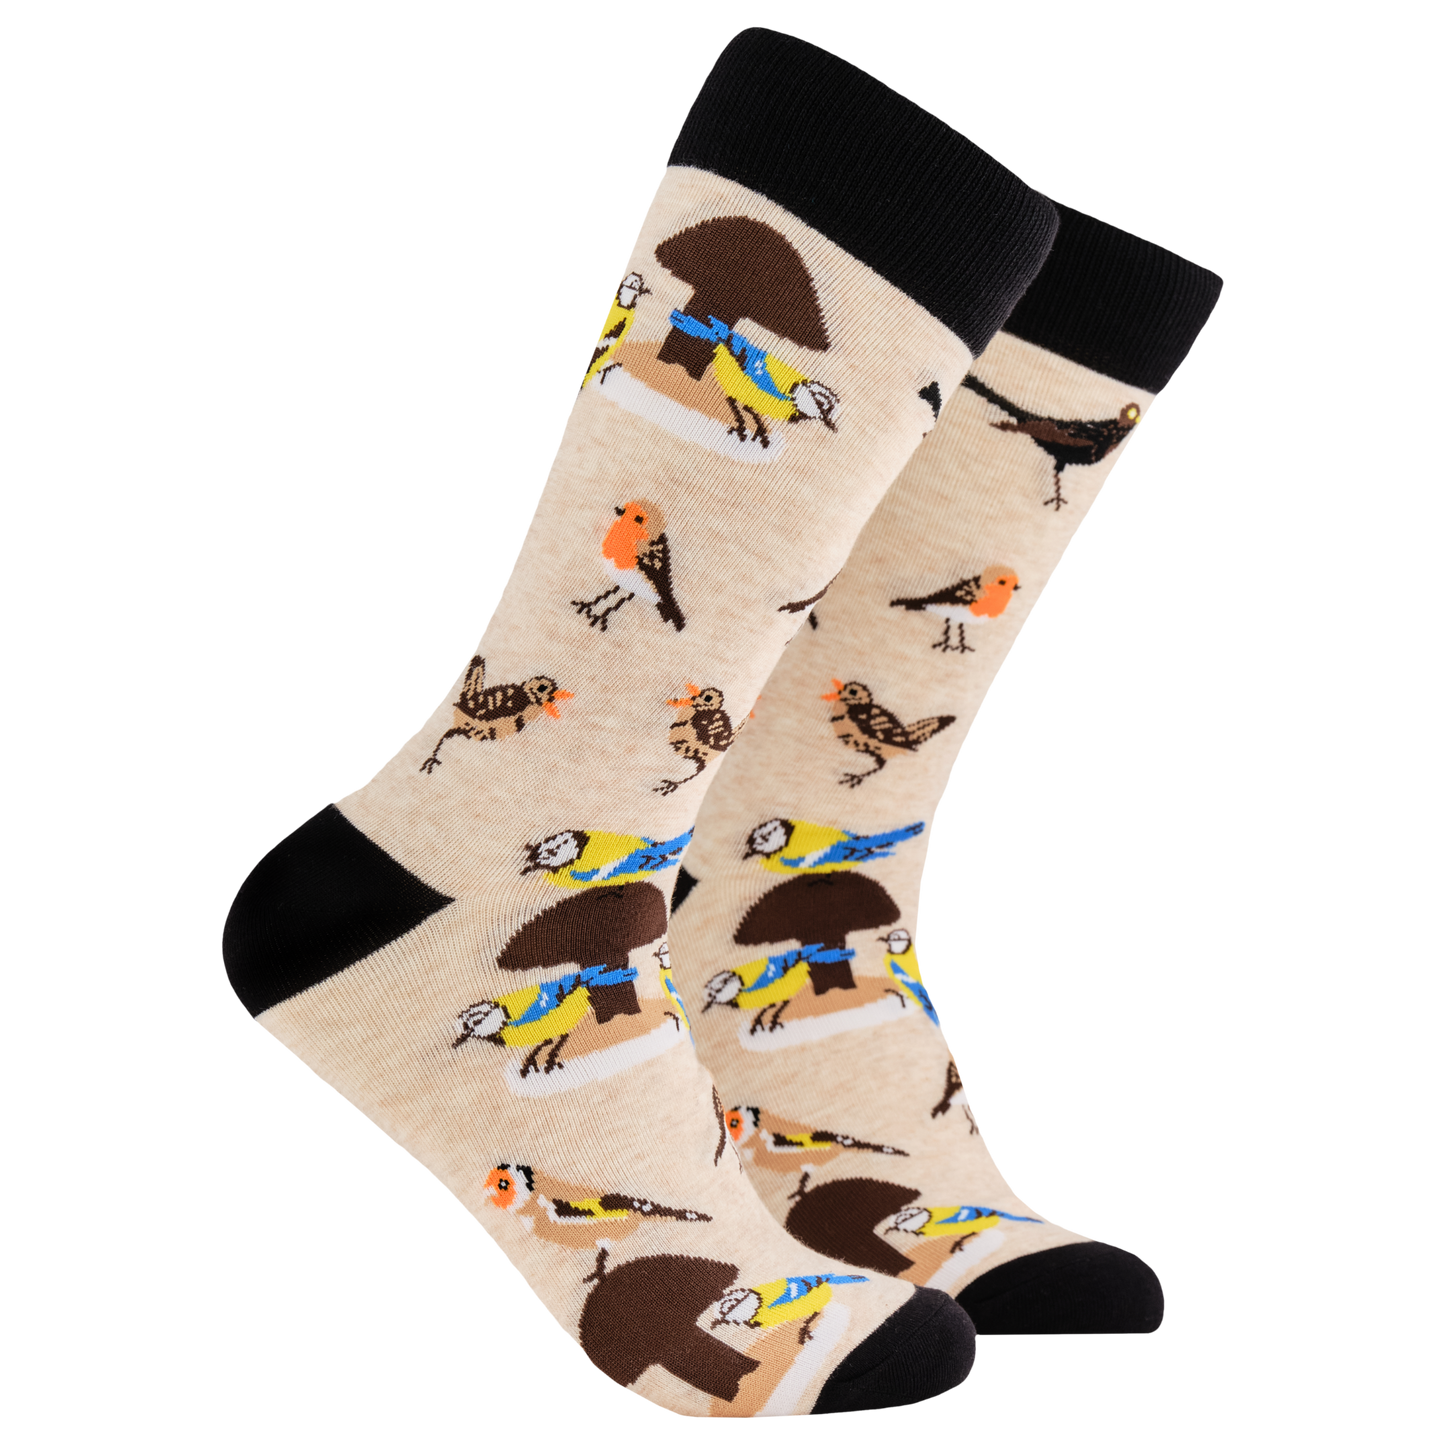 Bird Socks - Tweet Feet. A pair of socks depicting british birds. Oatmeal legs, black cuff, heel and toe.